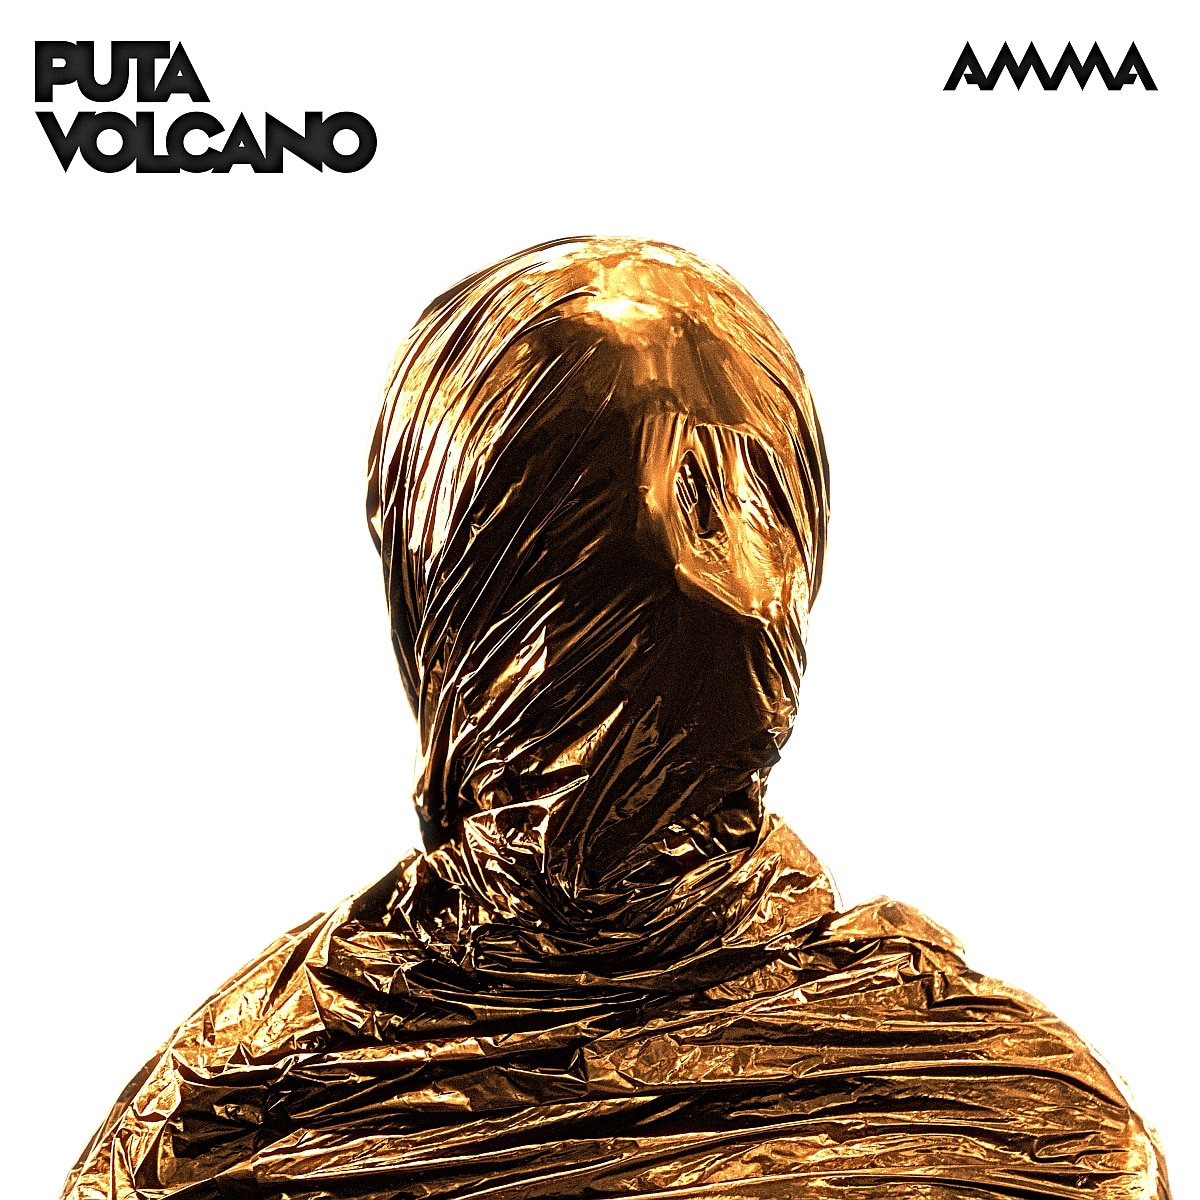 putavolcano_amma_artwork-cover